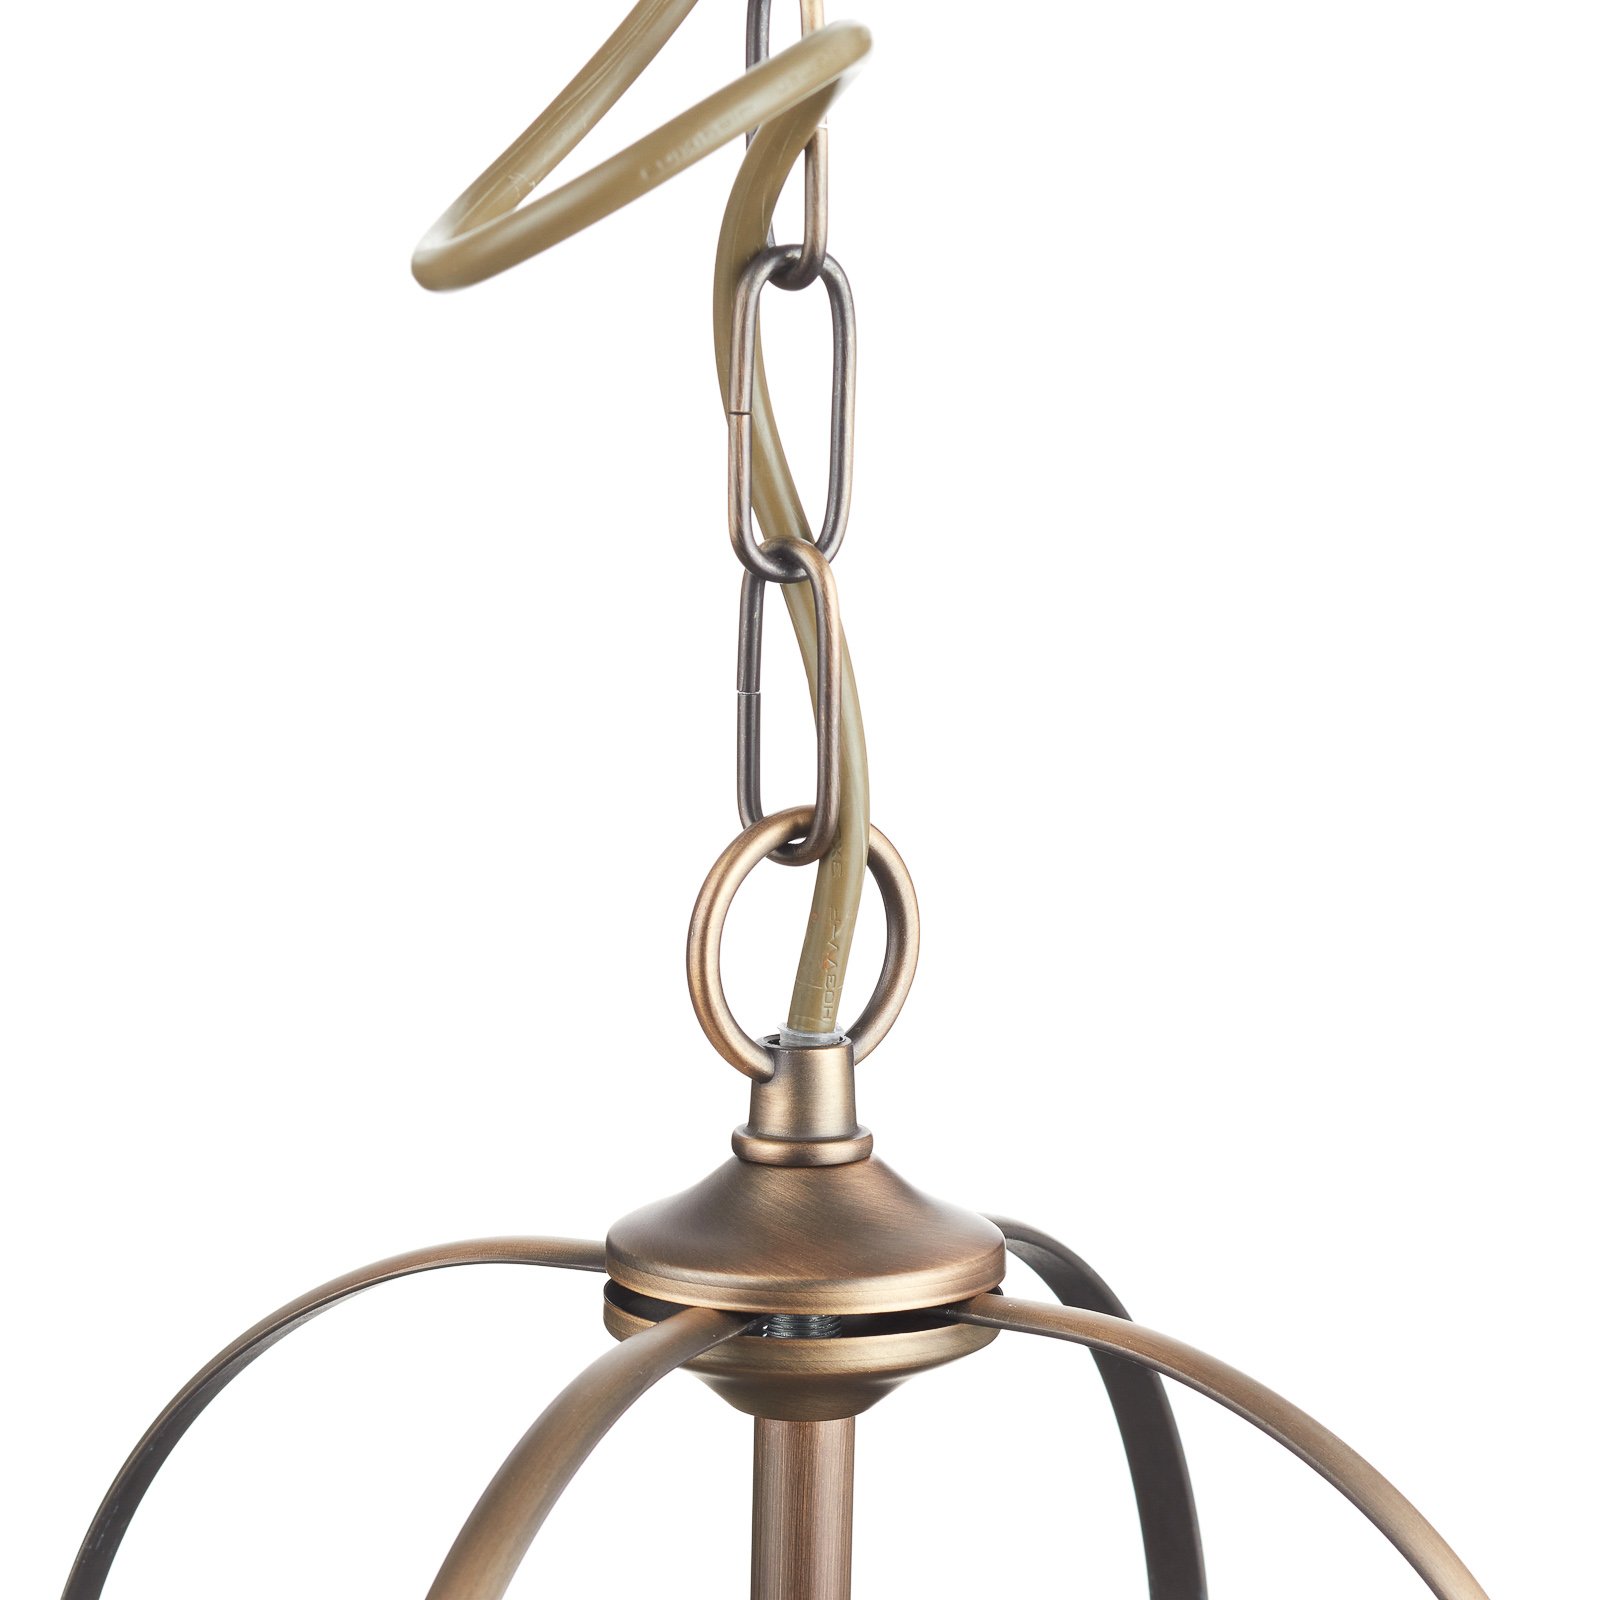 Decoratieve hanglamp Pimpernel, 23 cm